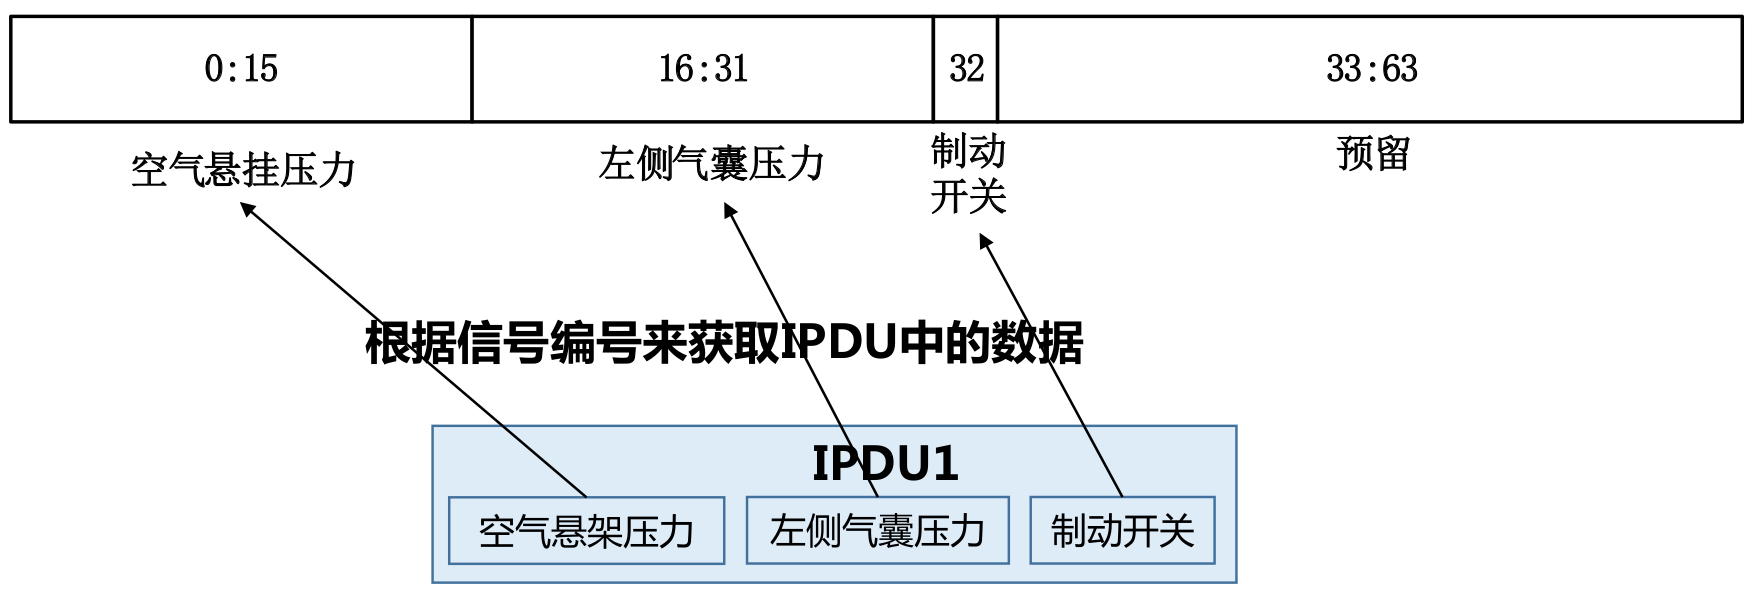 IPDU可以包含多个信号